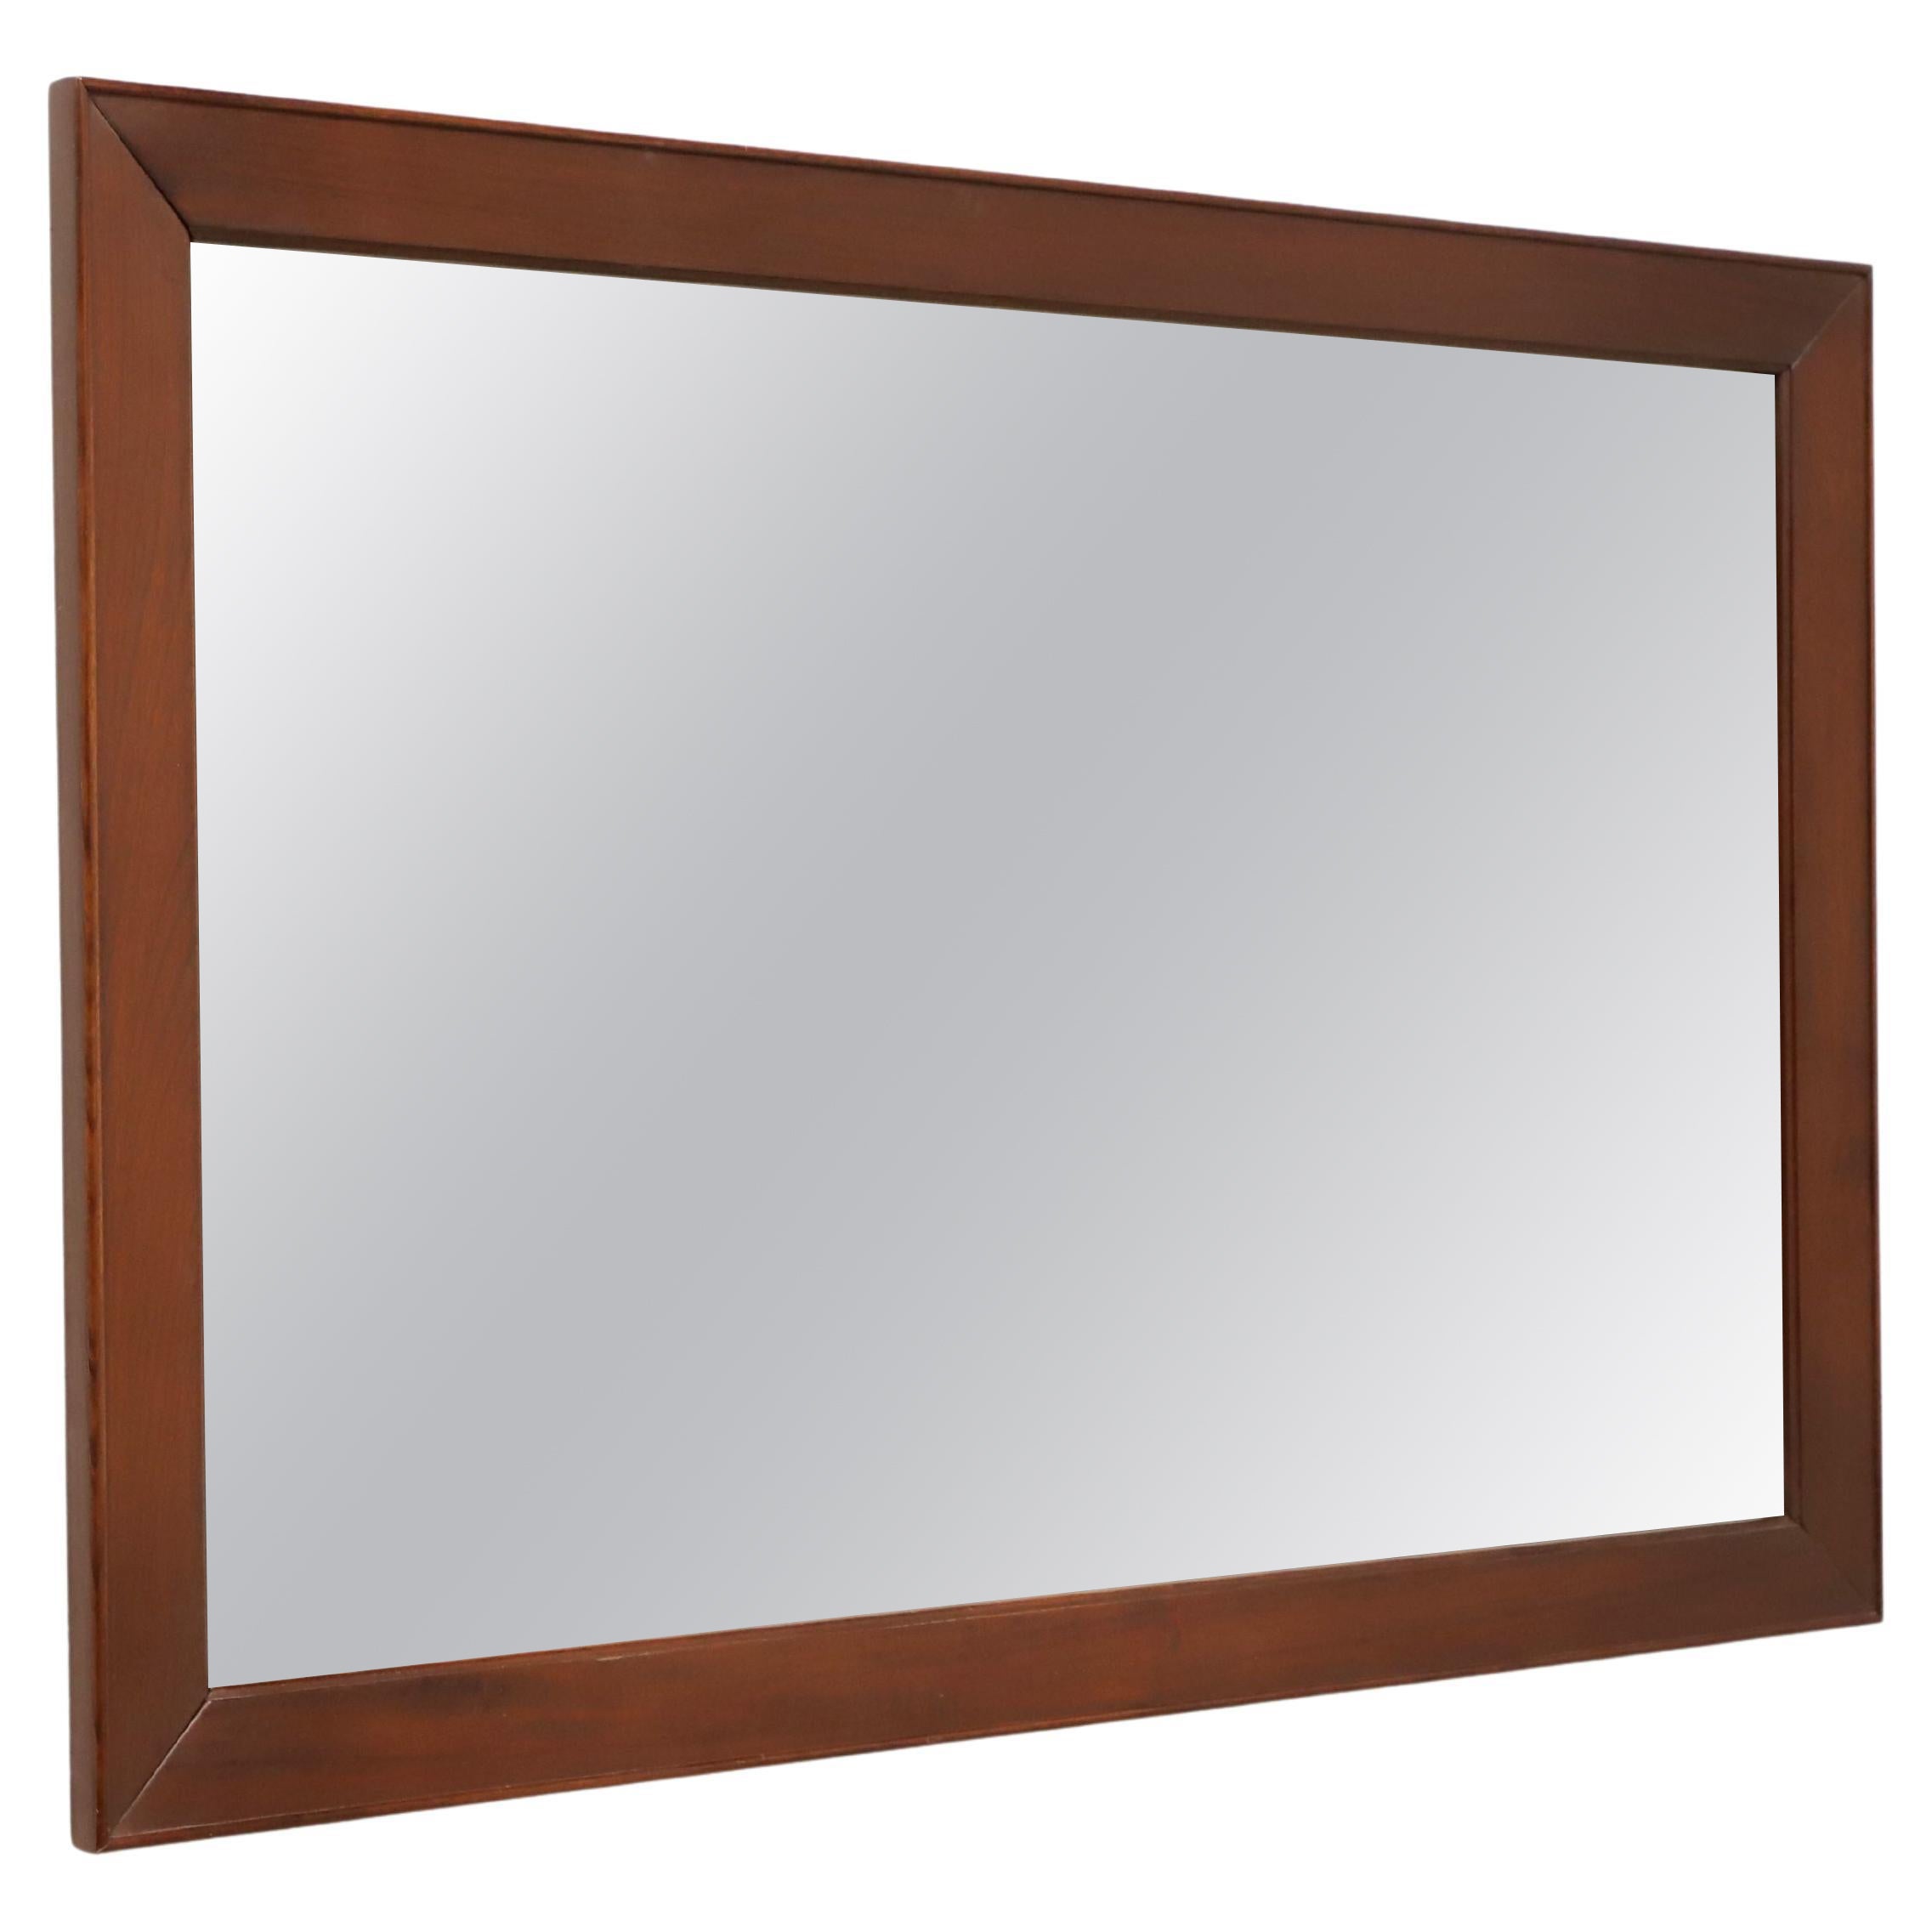 CRAFTIQUE Mellowax Solid Mahogany Rectangular Dresser / Wall Mirror For Sale